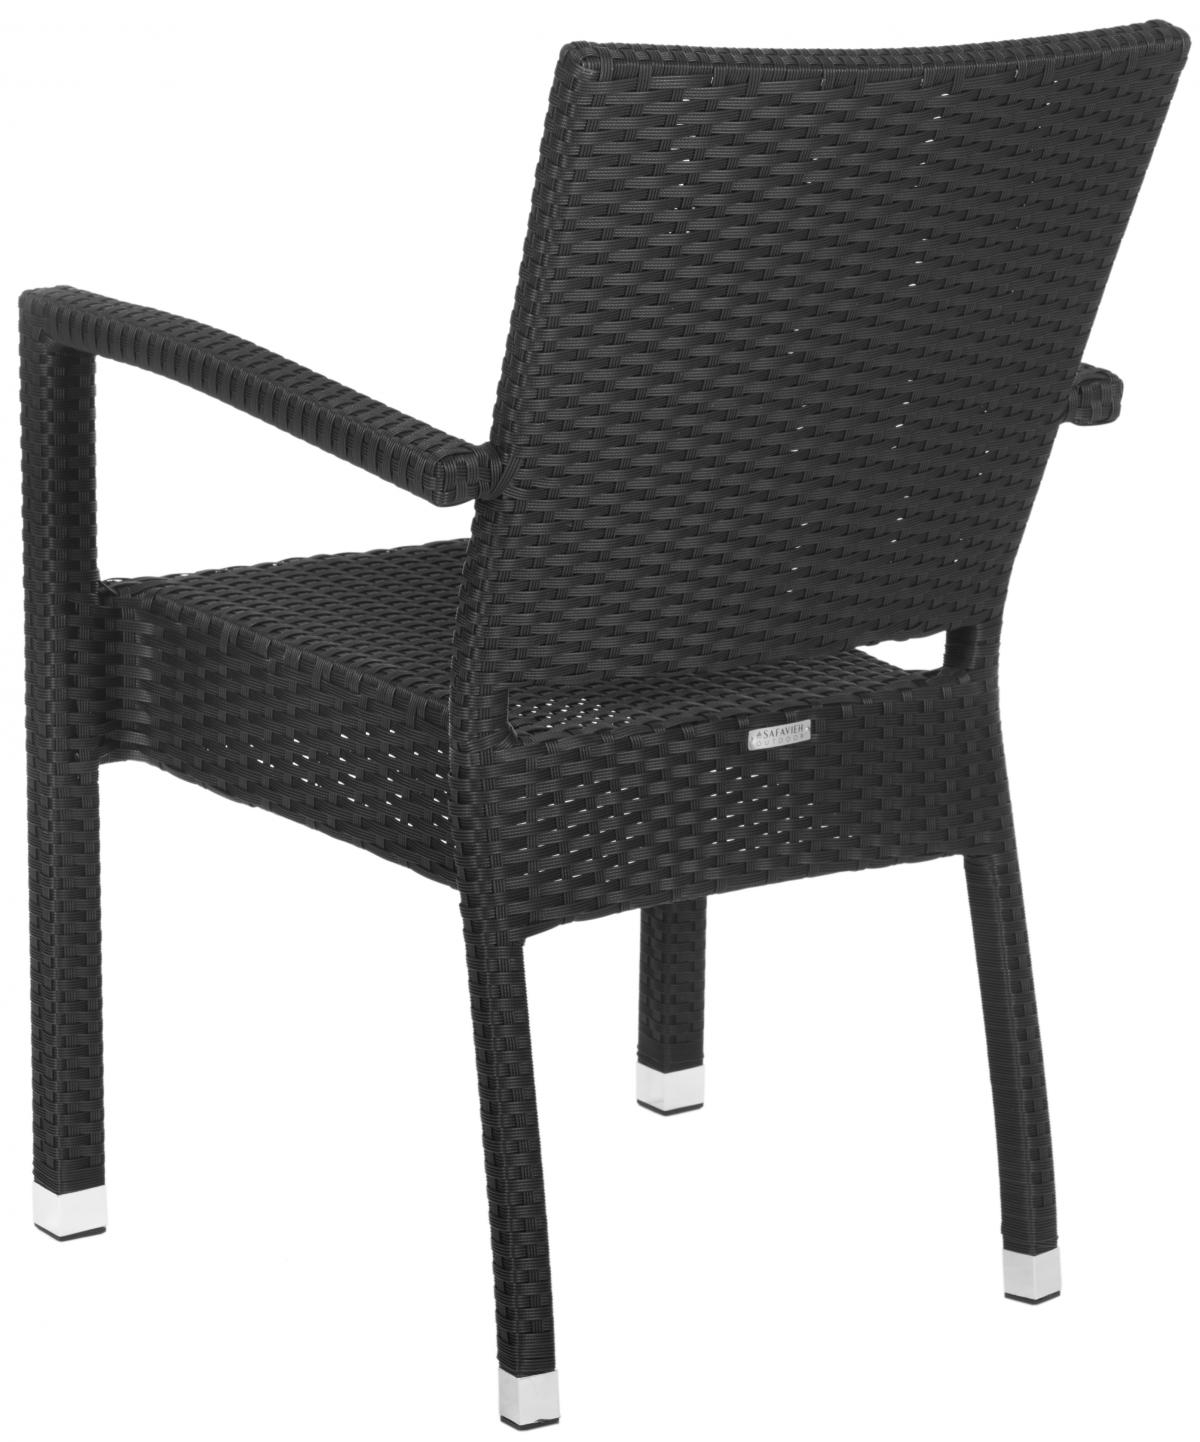 Kelda Stacking Arm Chair - Black - Arlo Home - Image 3